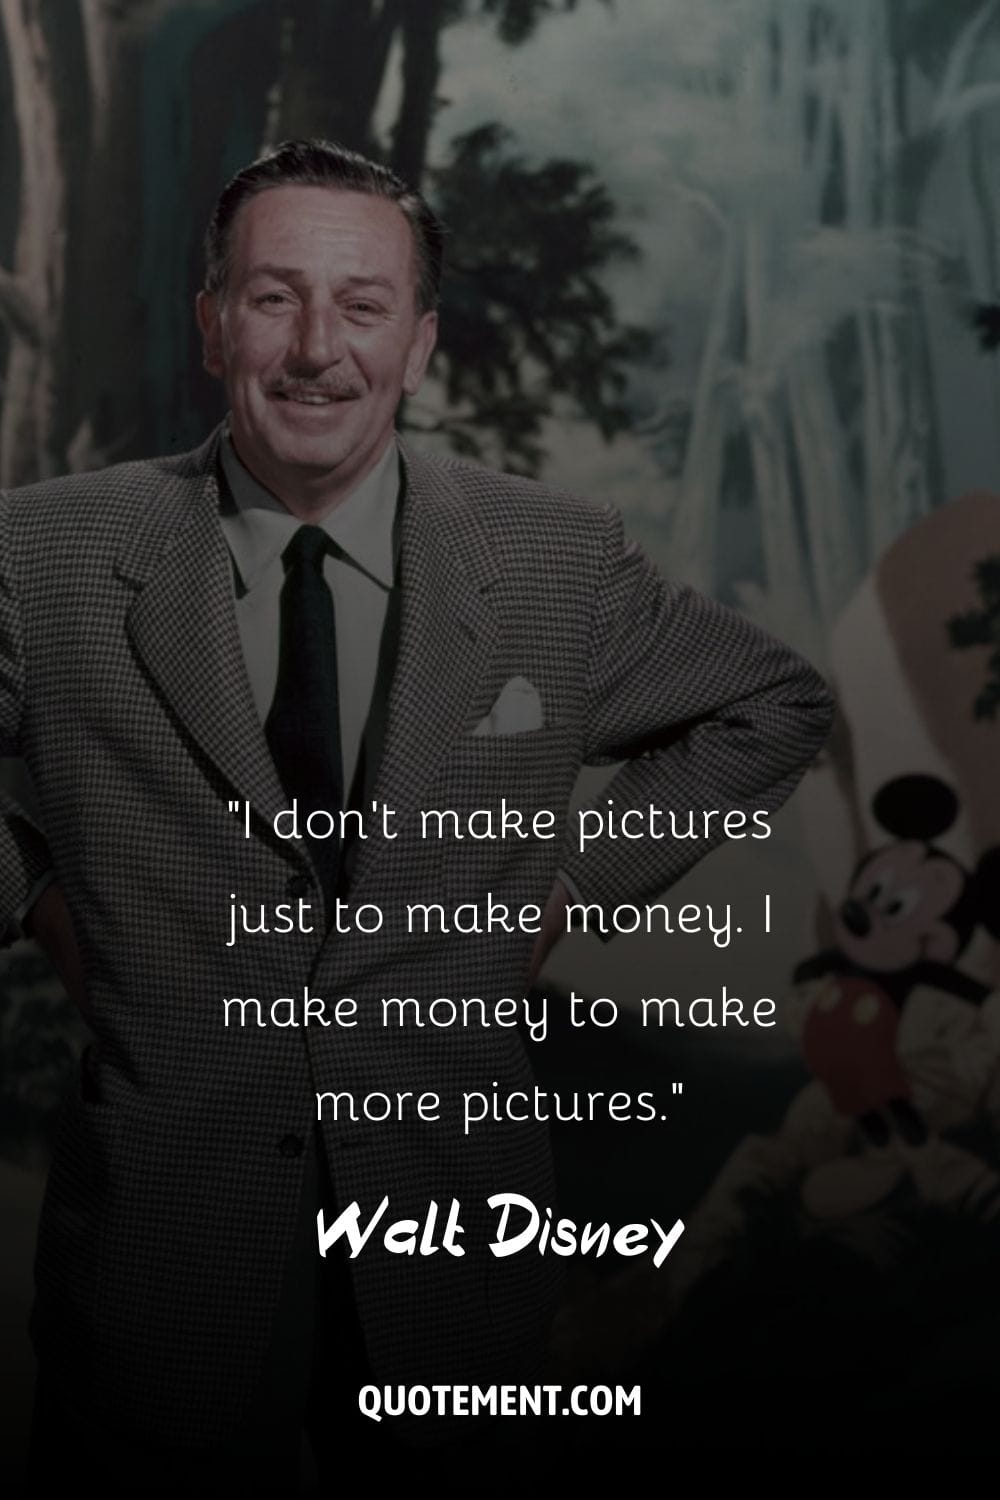 Walt Disney's pose embodies his visionary personality